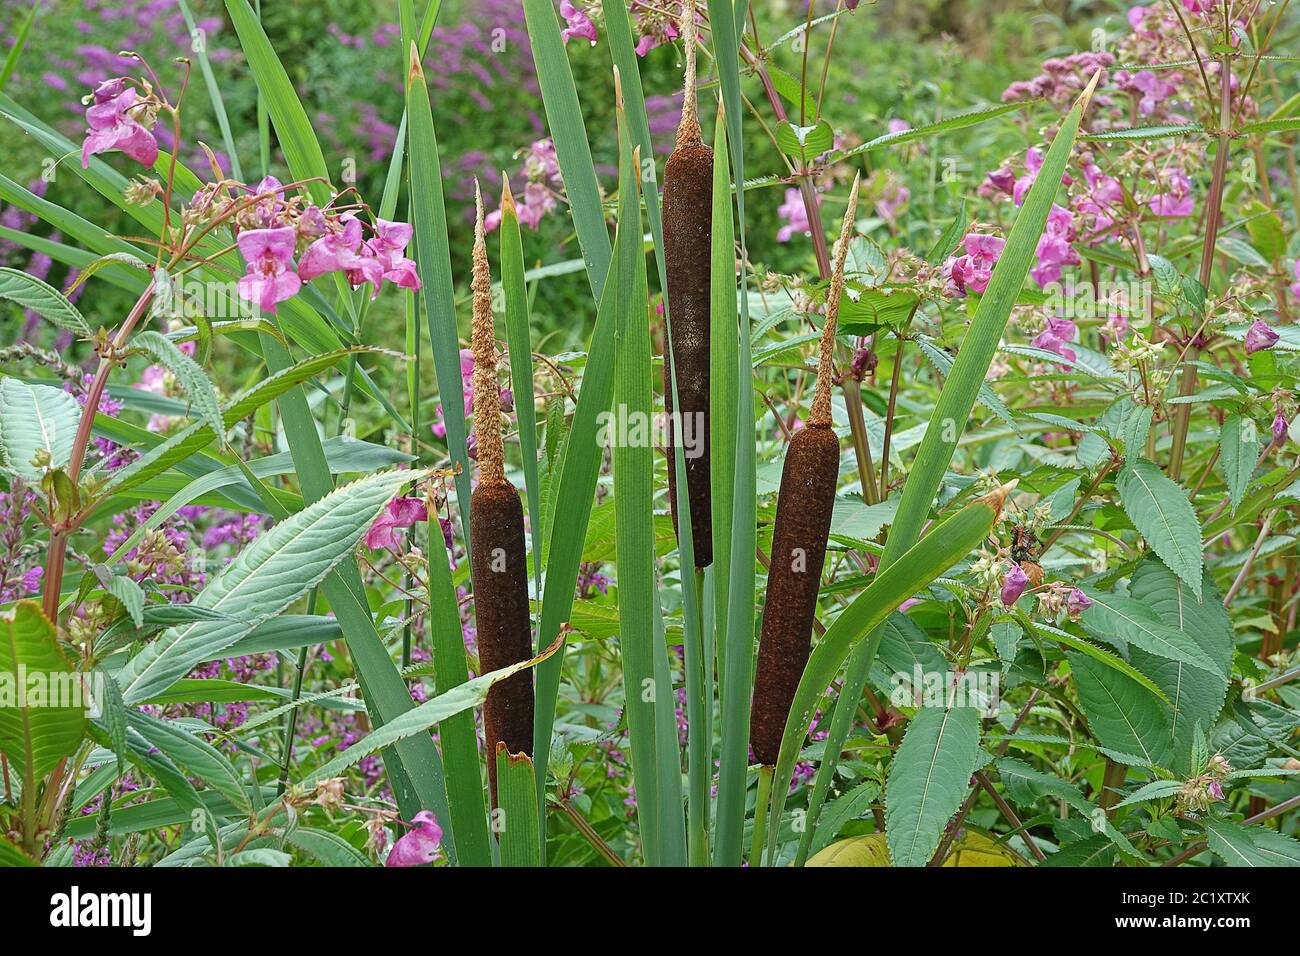 Cane piston Typha between Indian springweed Impatiens glandulifera Stock Photo